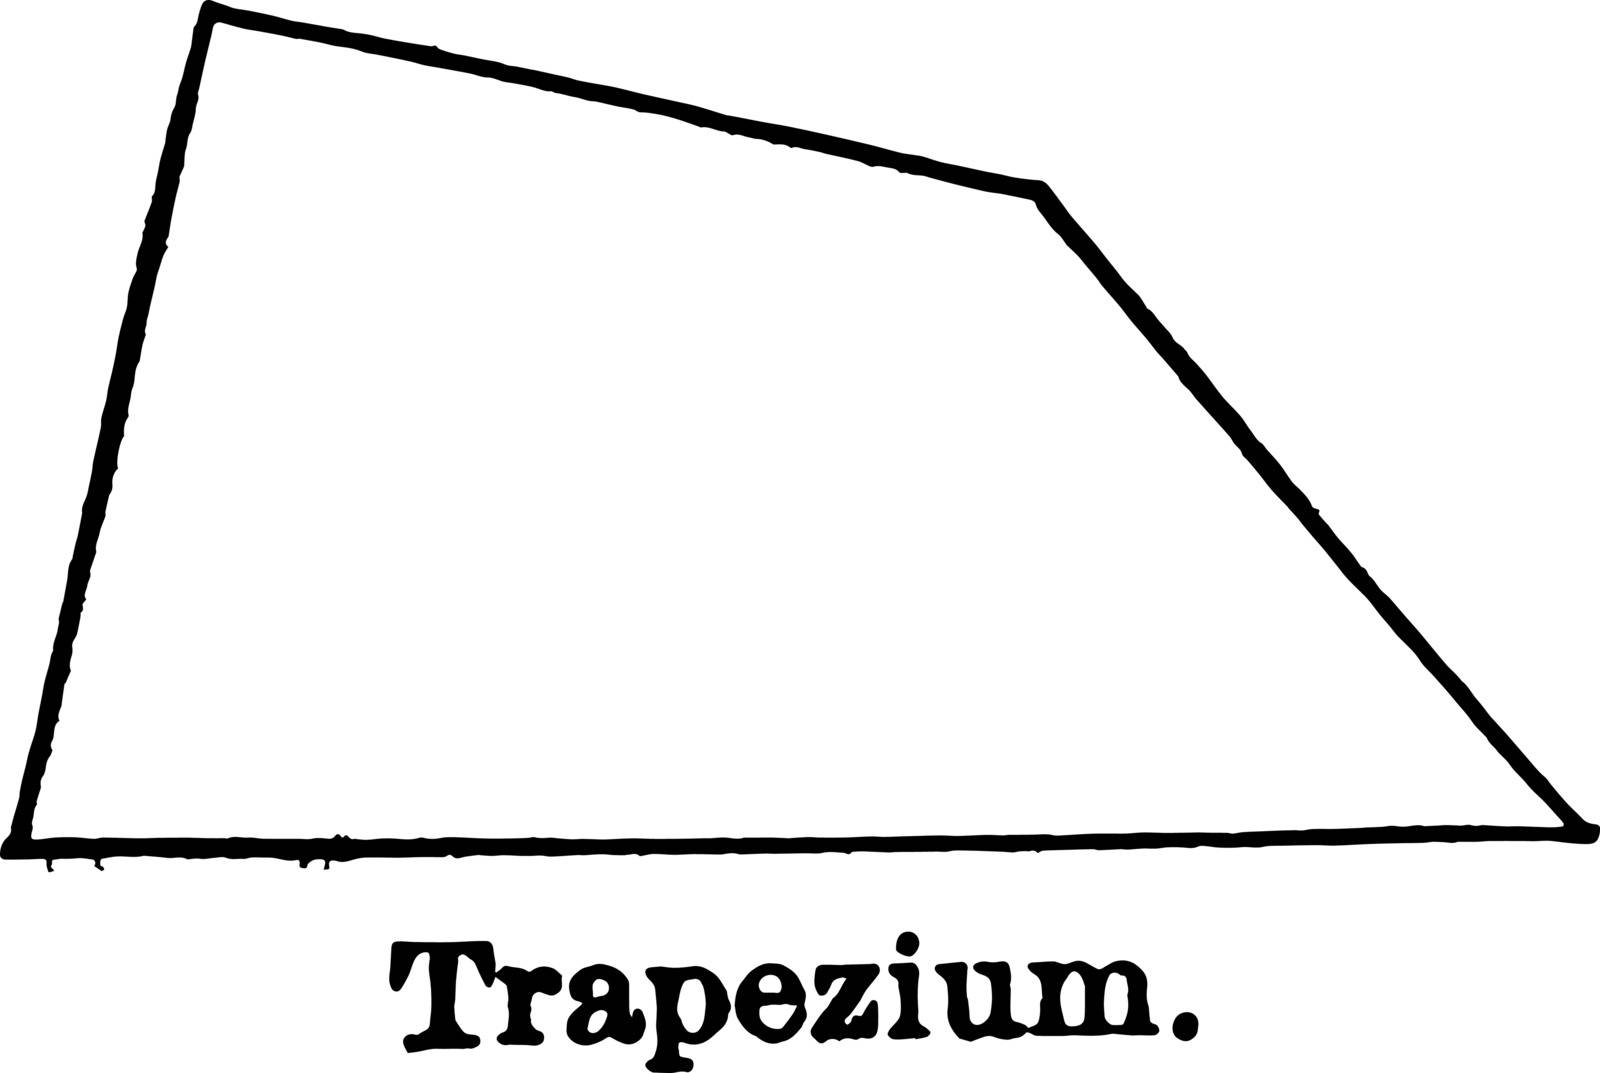 Trapezium vintage illustration.  by Morphart